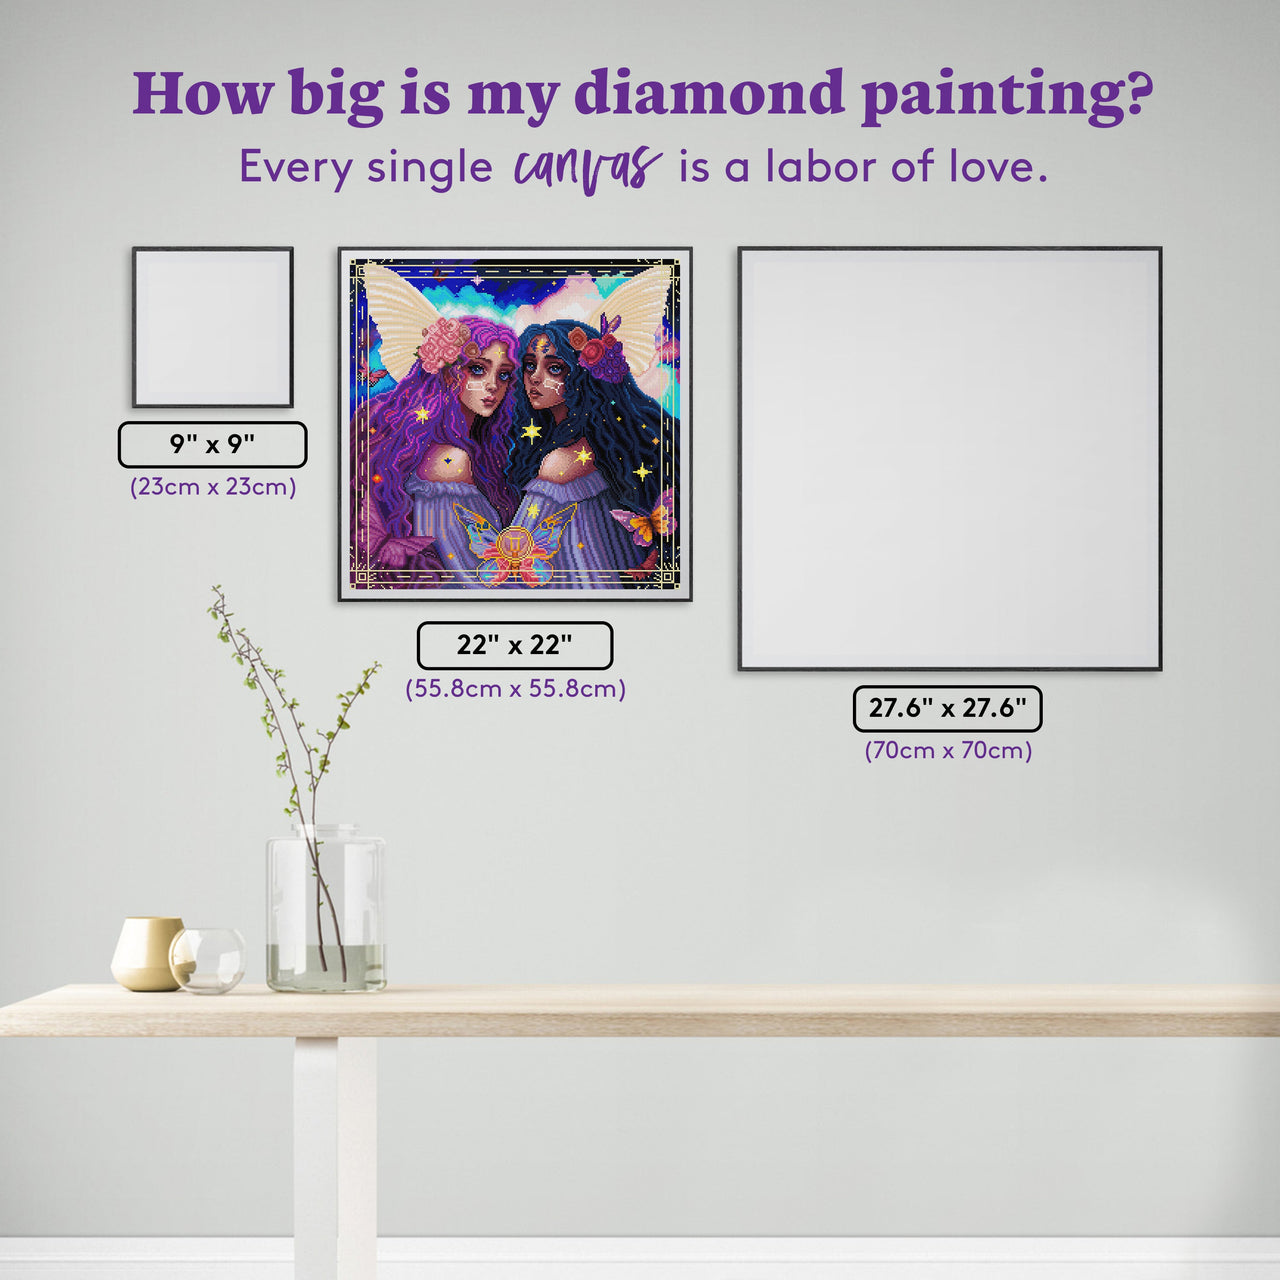 Diamond Painting Gemini 22" x 22" (55.8cm x 55.8cm) / Square with 62 Colors including 6 ABs, 1 Iridescent Diamond, and 2 Fairy Dust Diamonds / 50,176